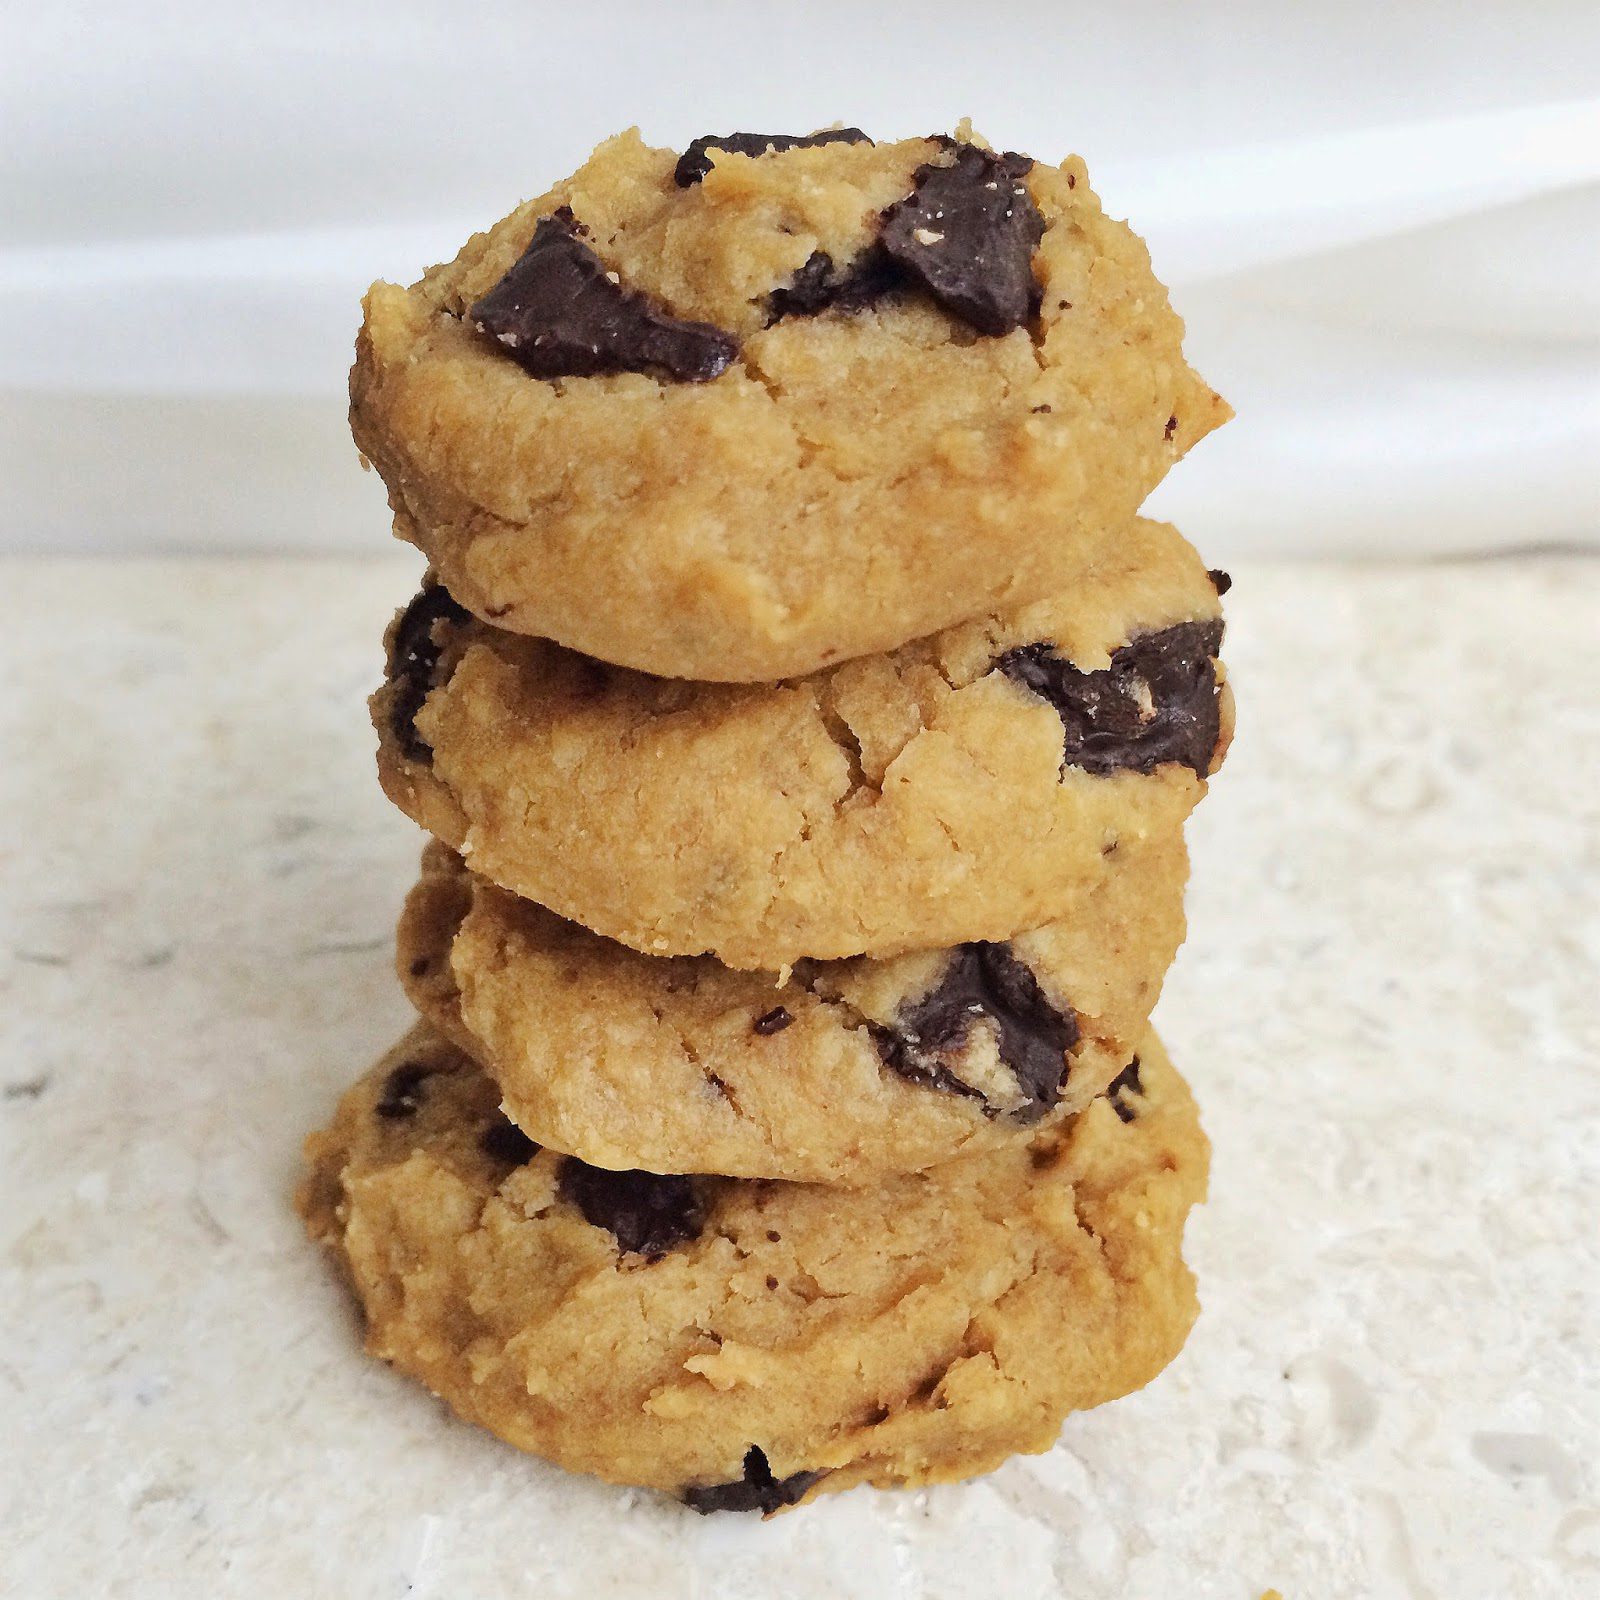 Flourless Peanut Butter Chocolate Chunk Cookies [Gluten Free + Vegan]